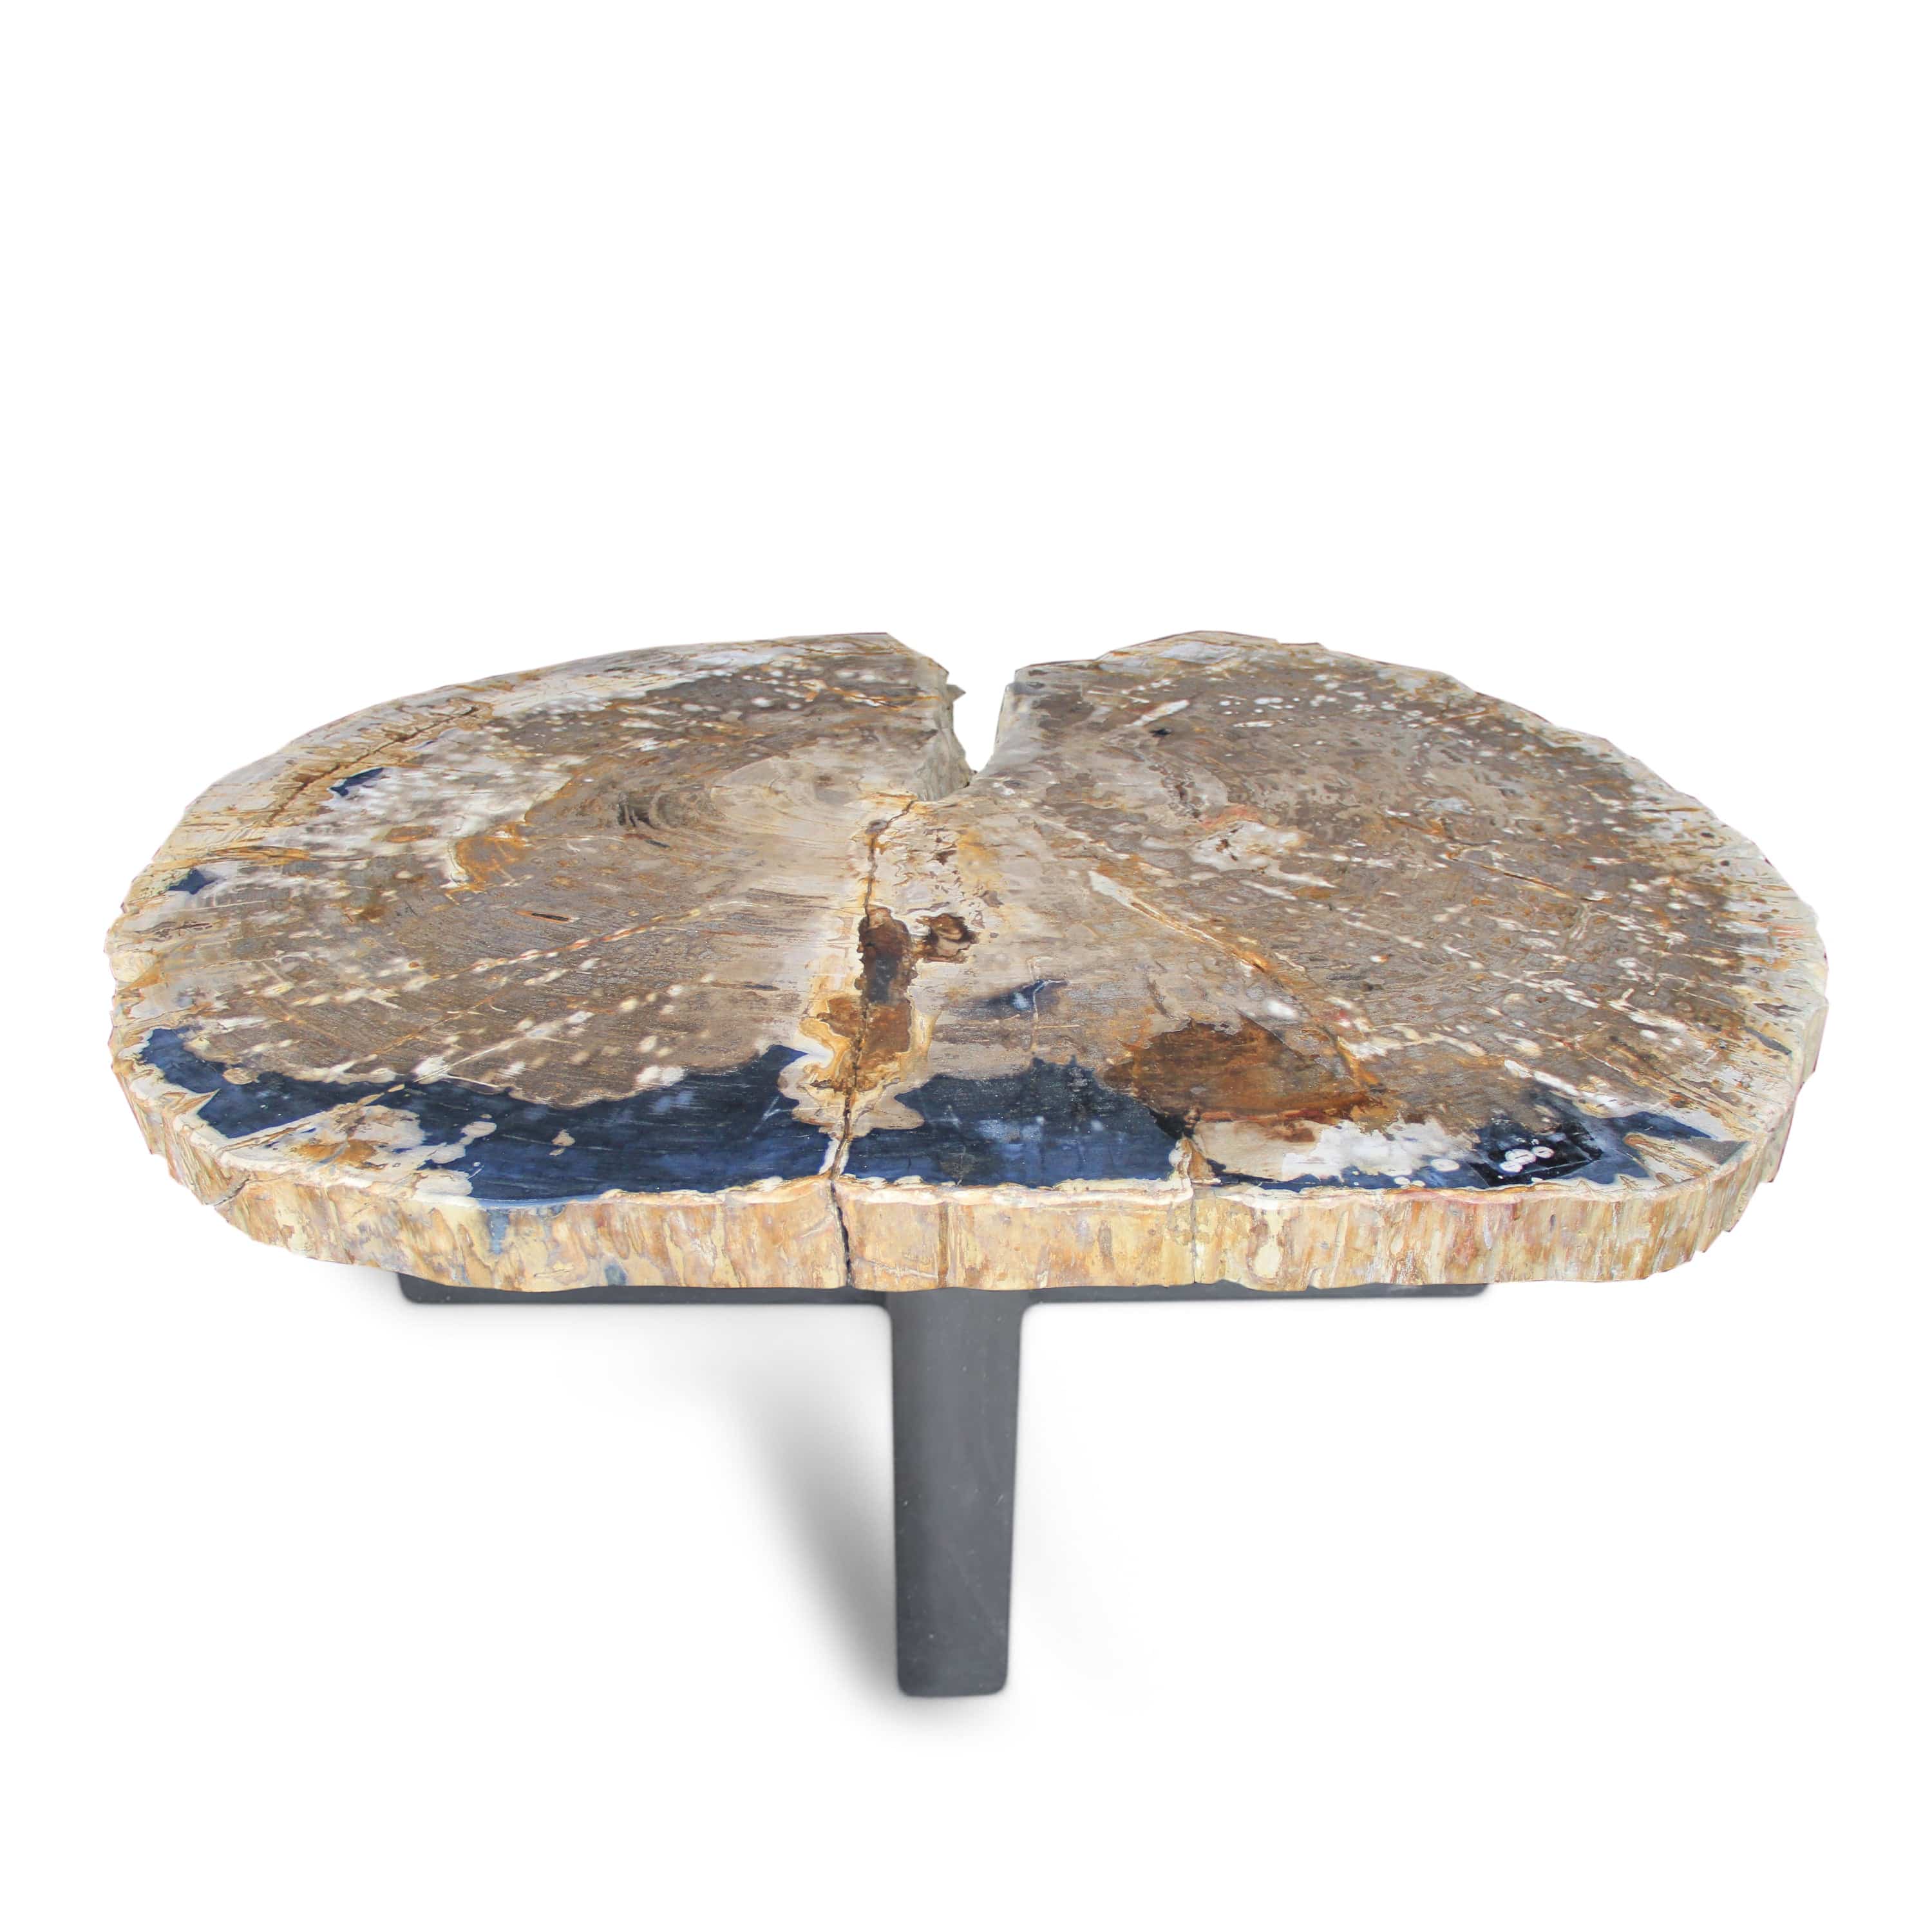 Kalifano Petrified Wood Polished Petrified Wood Coffee Table from Indonesia - 54" / 397 lbs PWT14400.002